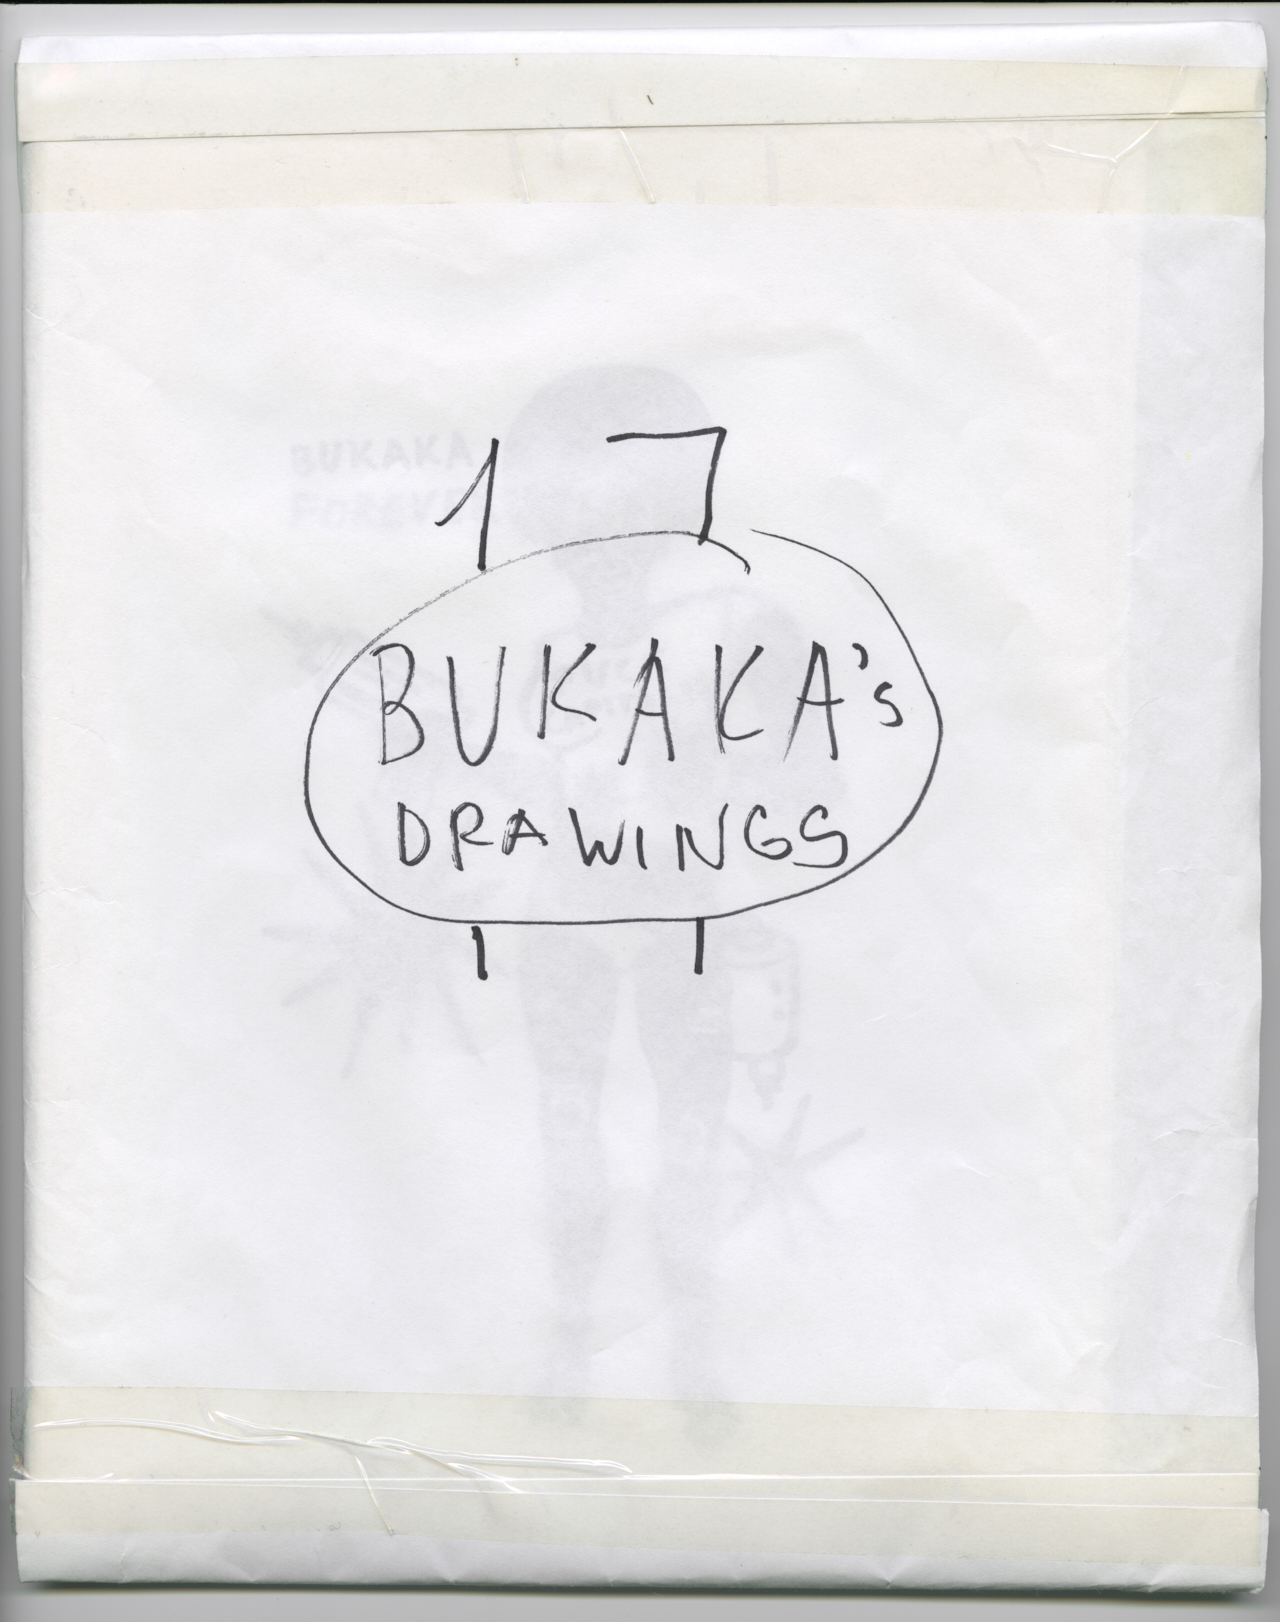 Bukaka's Drawings by Alexander Brener and Barbara Schurz